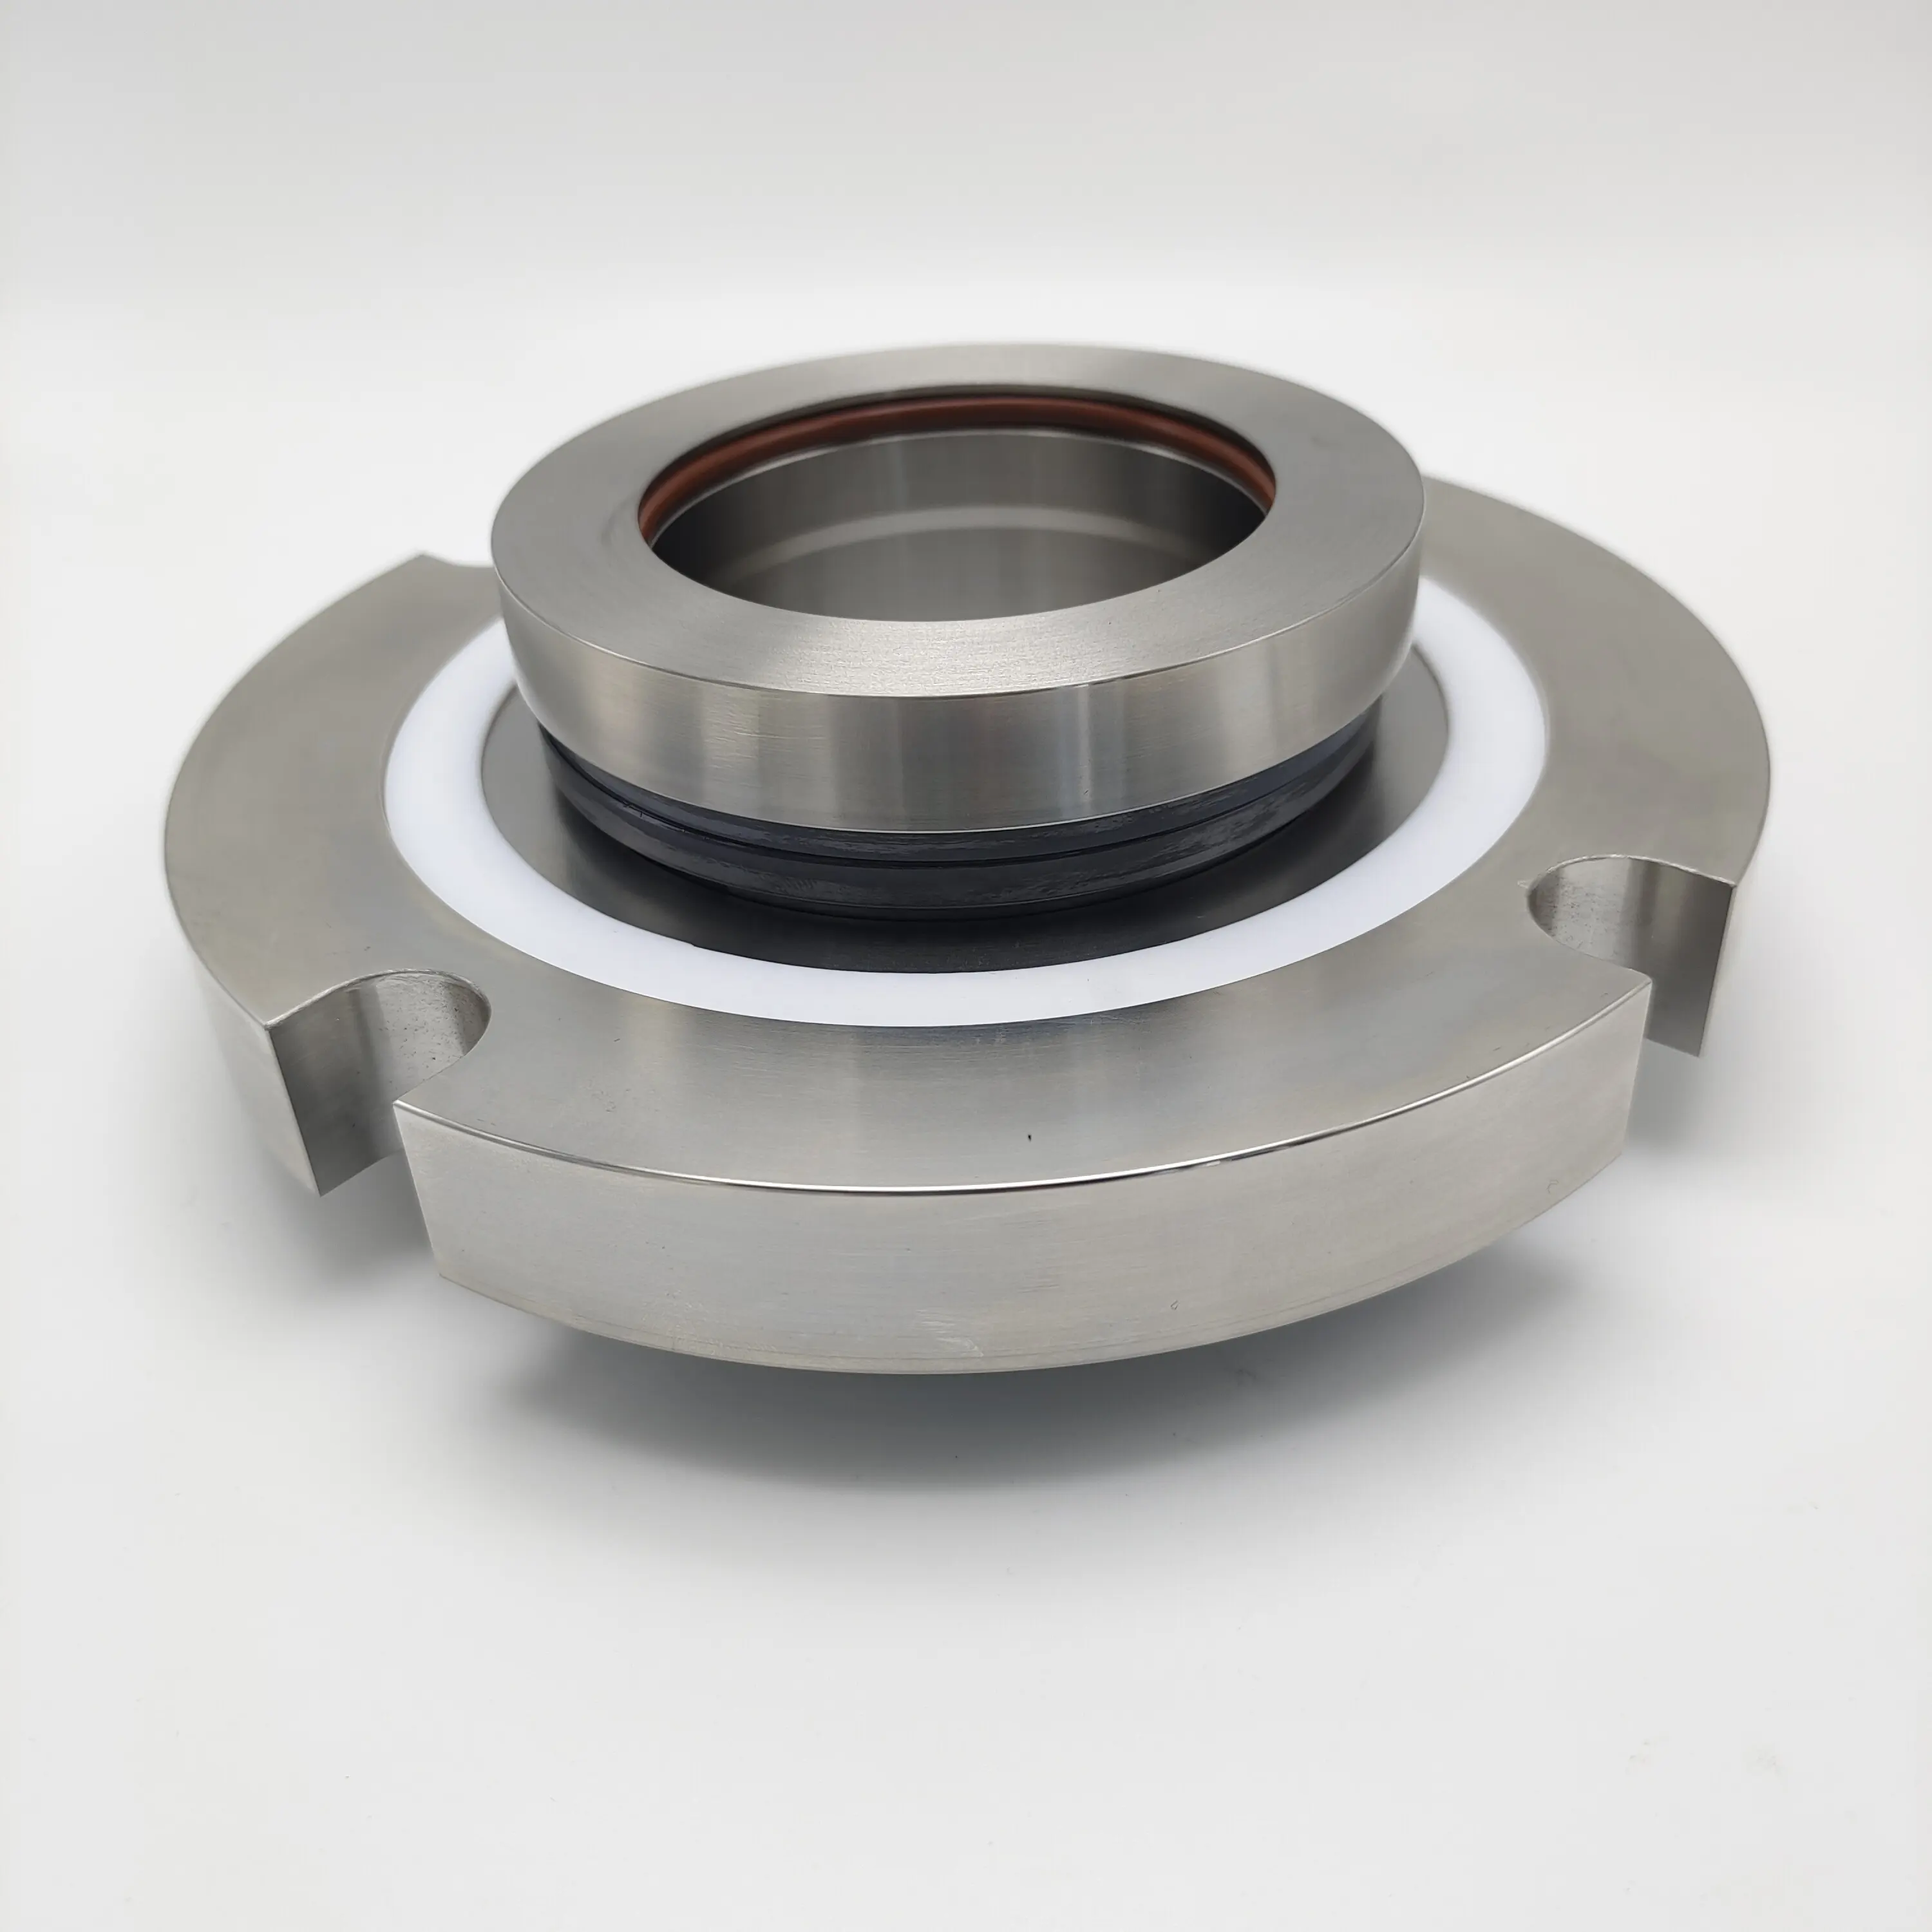 4ES C065 Cartridge Mechanical Seal For KSB Etanorm-R Series Pumps Shafts Size 65mm